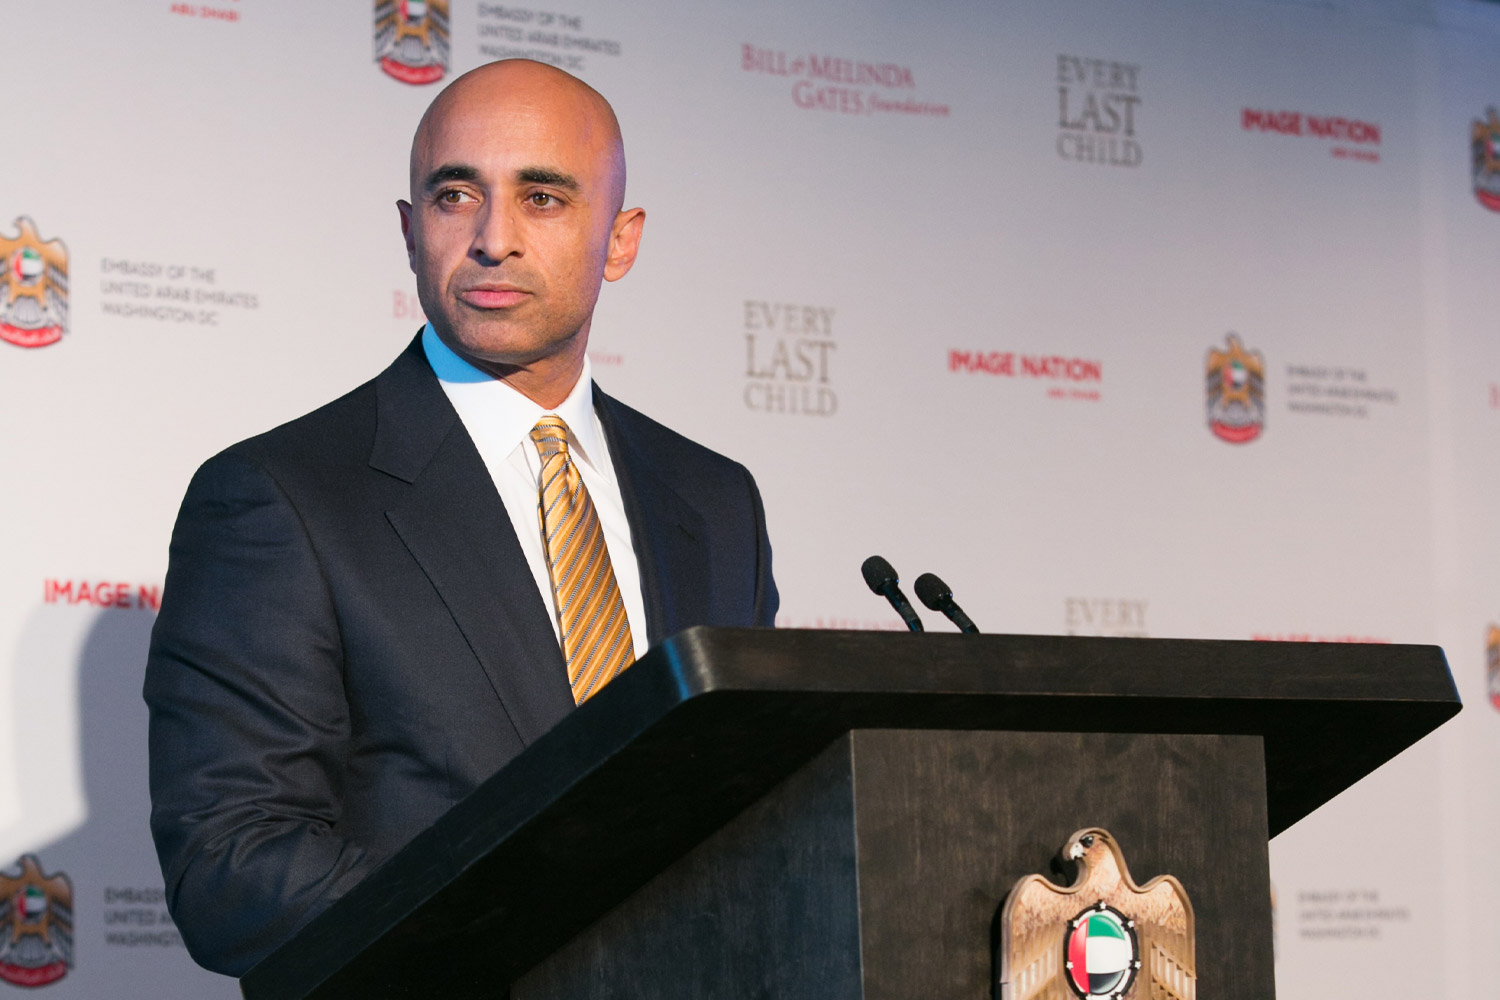 Yousef Al Otaiba highlight's the UAE's partnership with the Bill and Melinda Gates Foundation